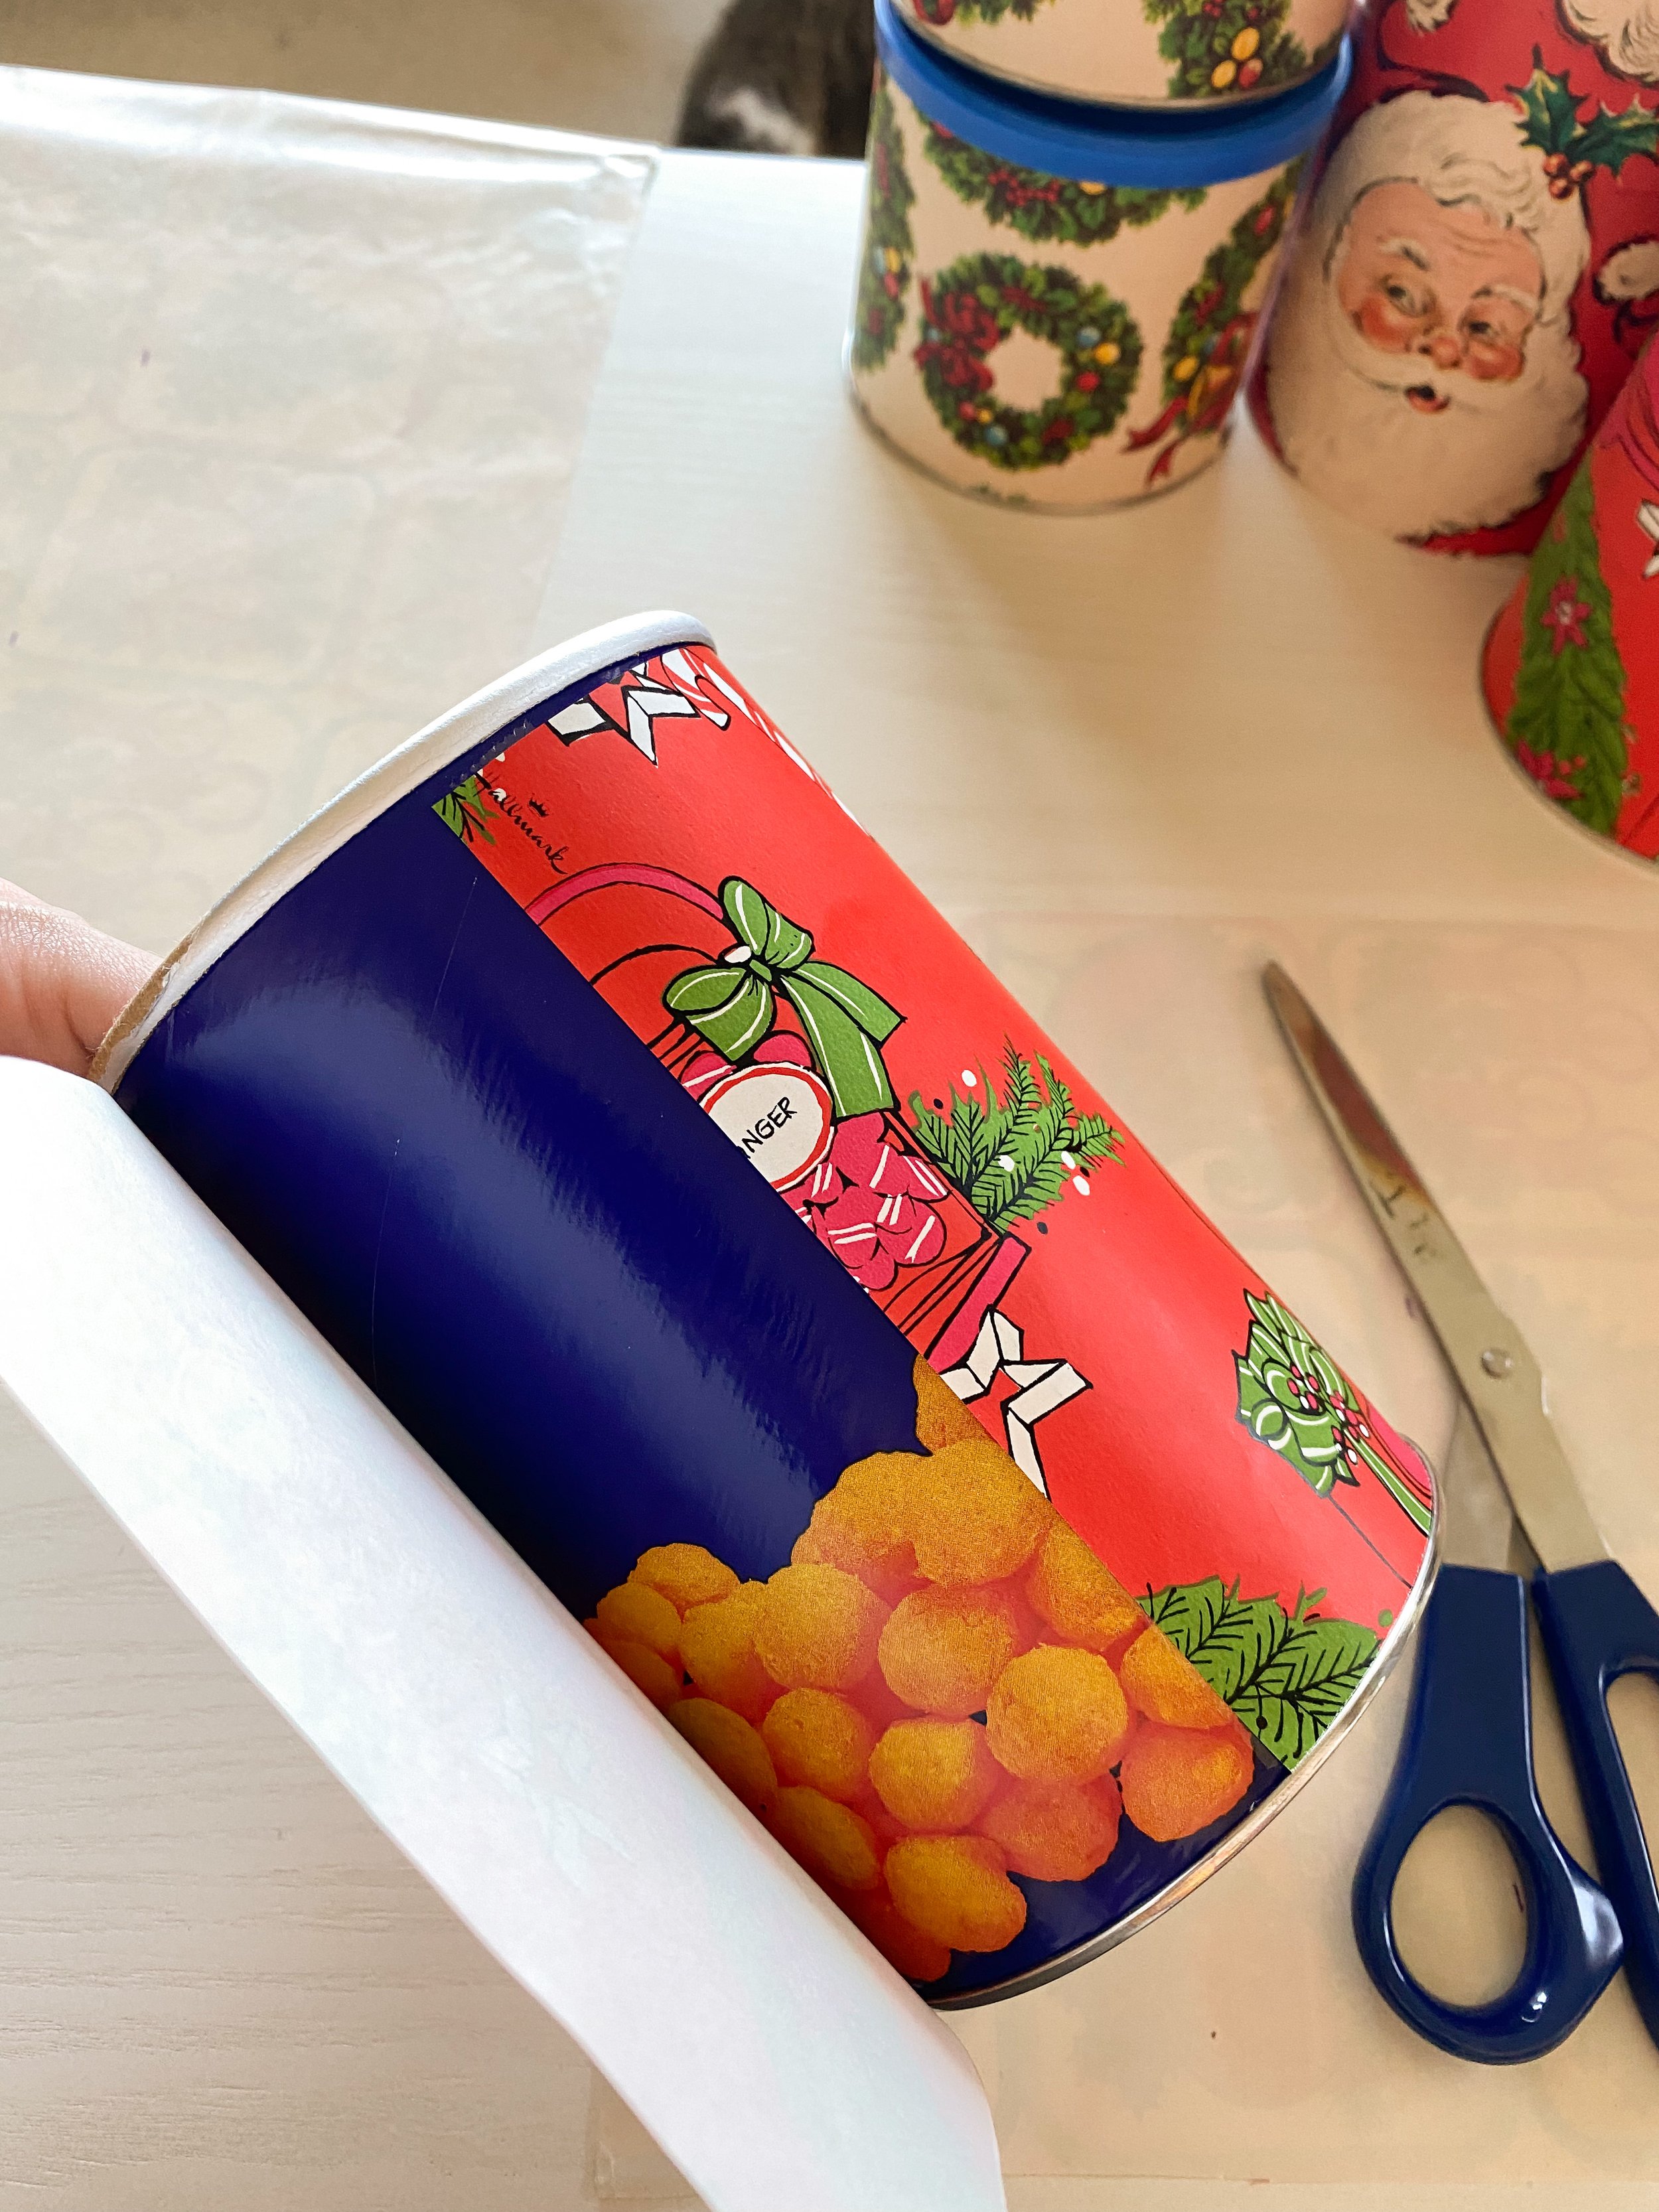 Make Christmas gifts out of trash